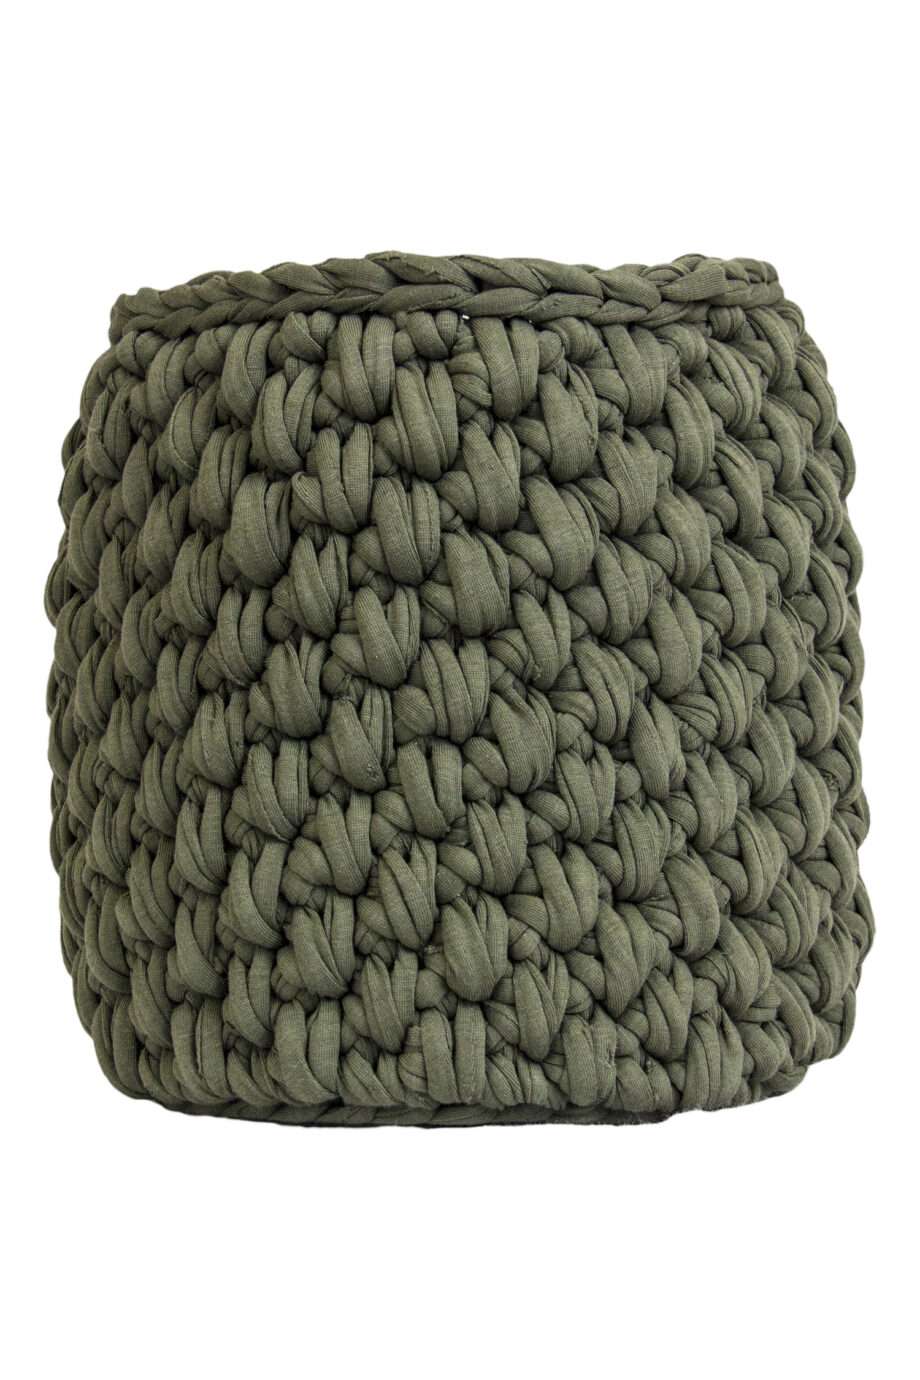 peony olive green crochet cotton basket medium